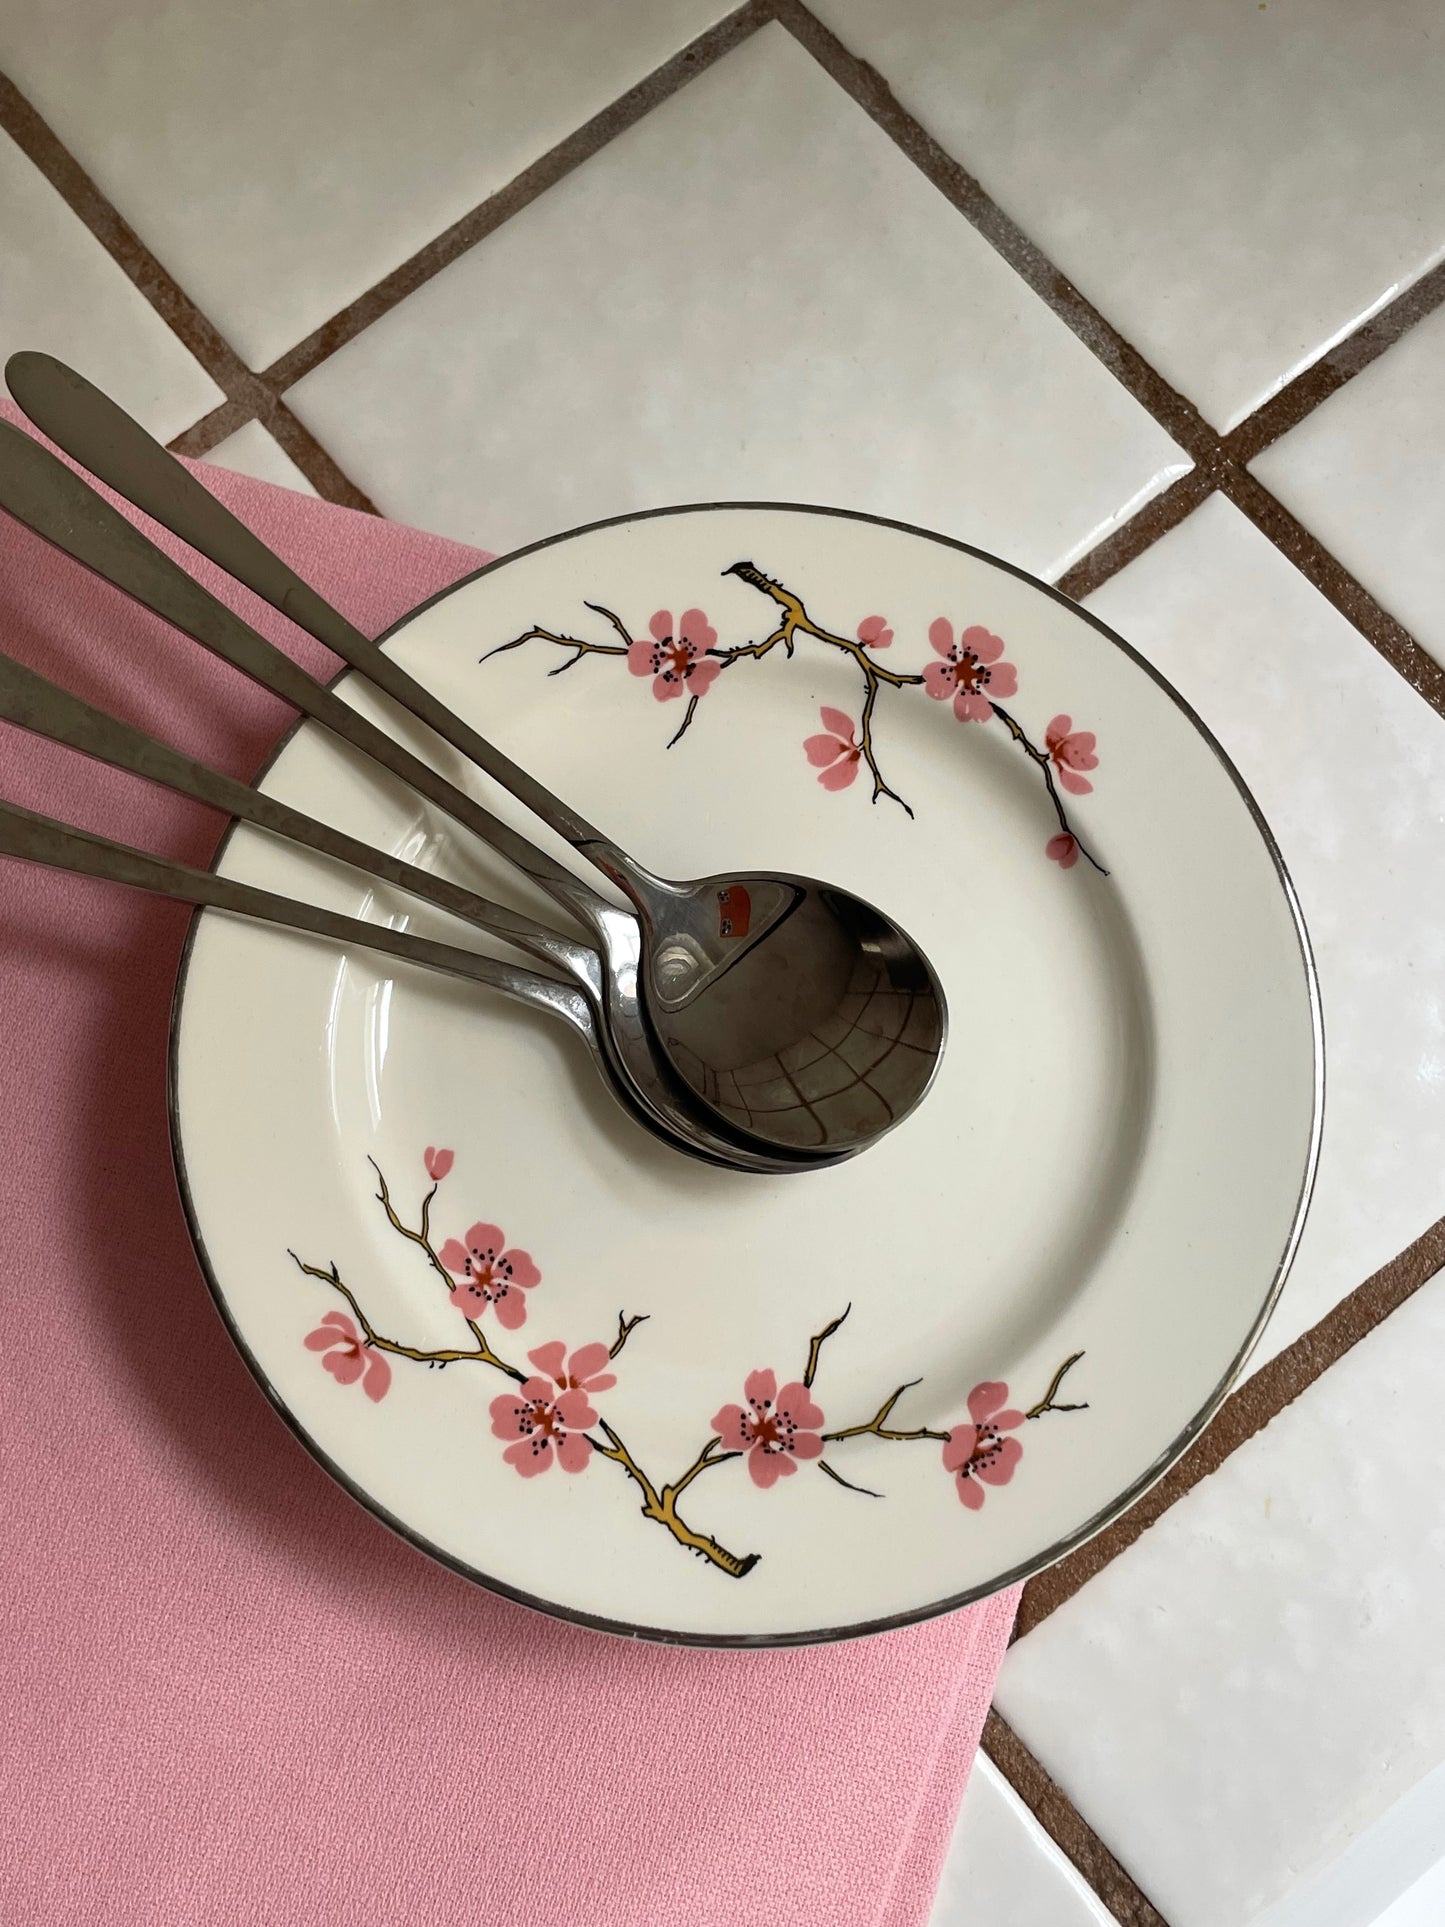 Cherry Blossom Treat Plates, Set of 5